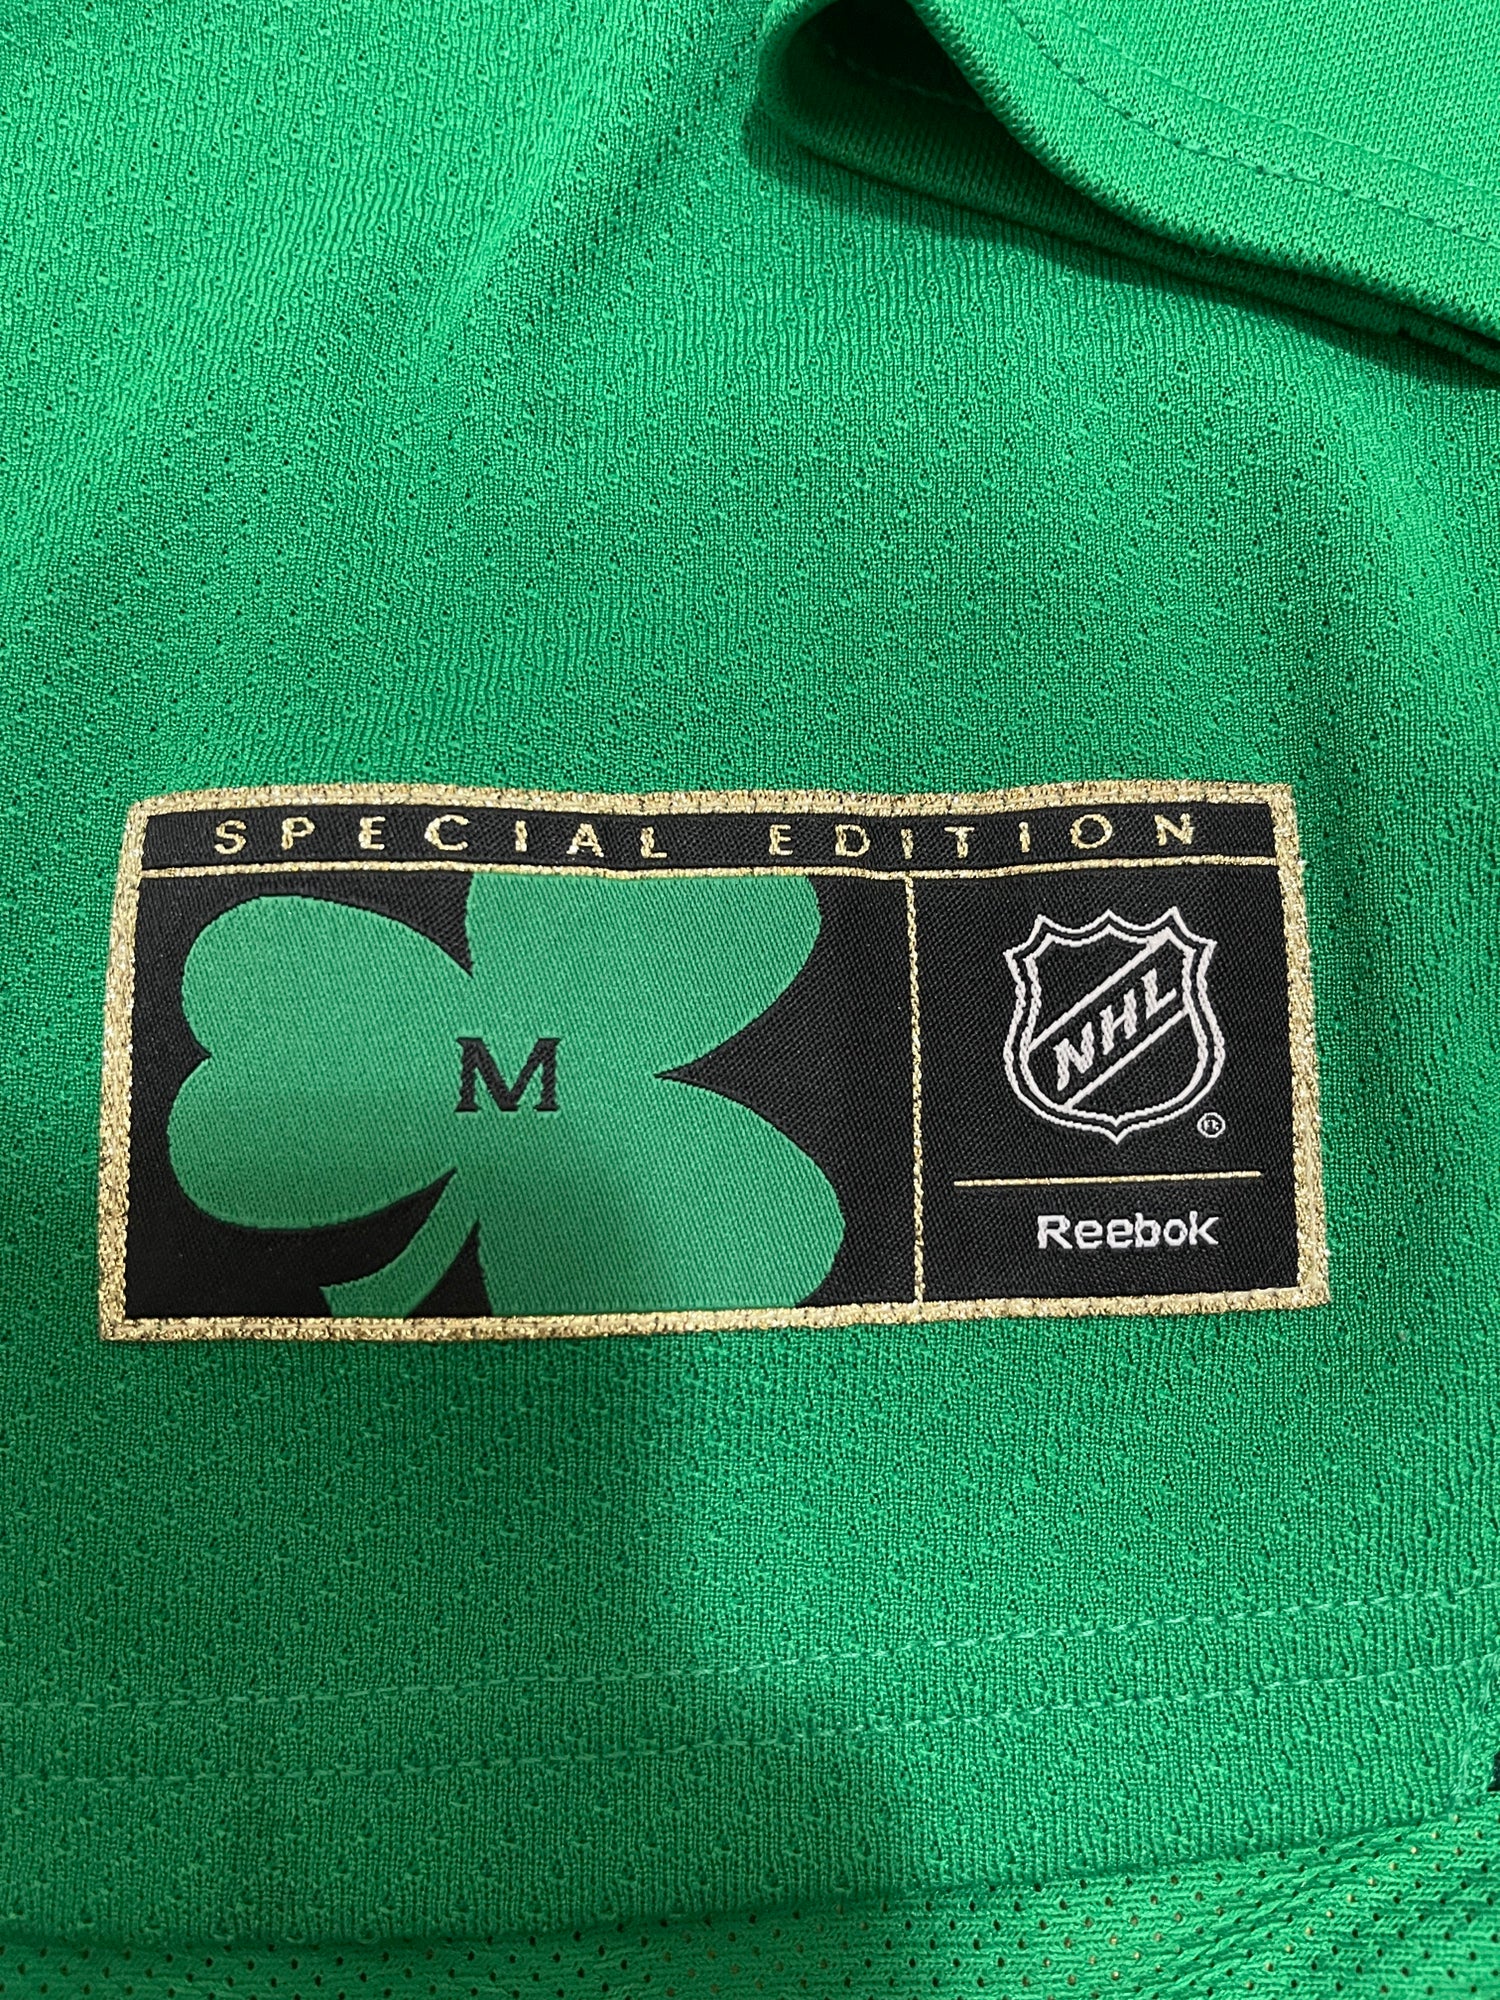 NHL Reebok Boston Bruins Green St Patricks Day Jersey Mens XXL Official